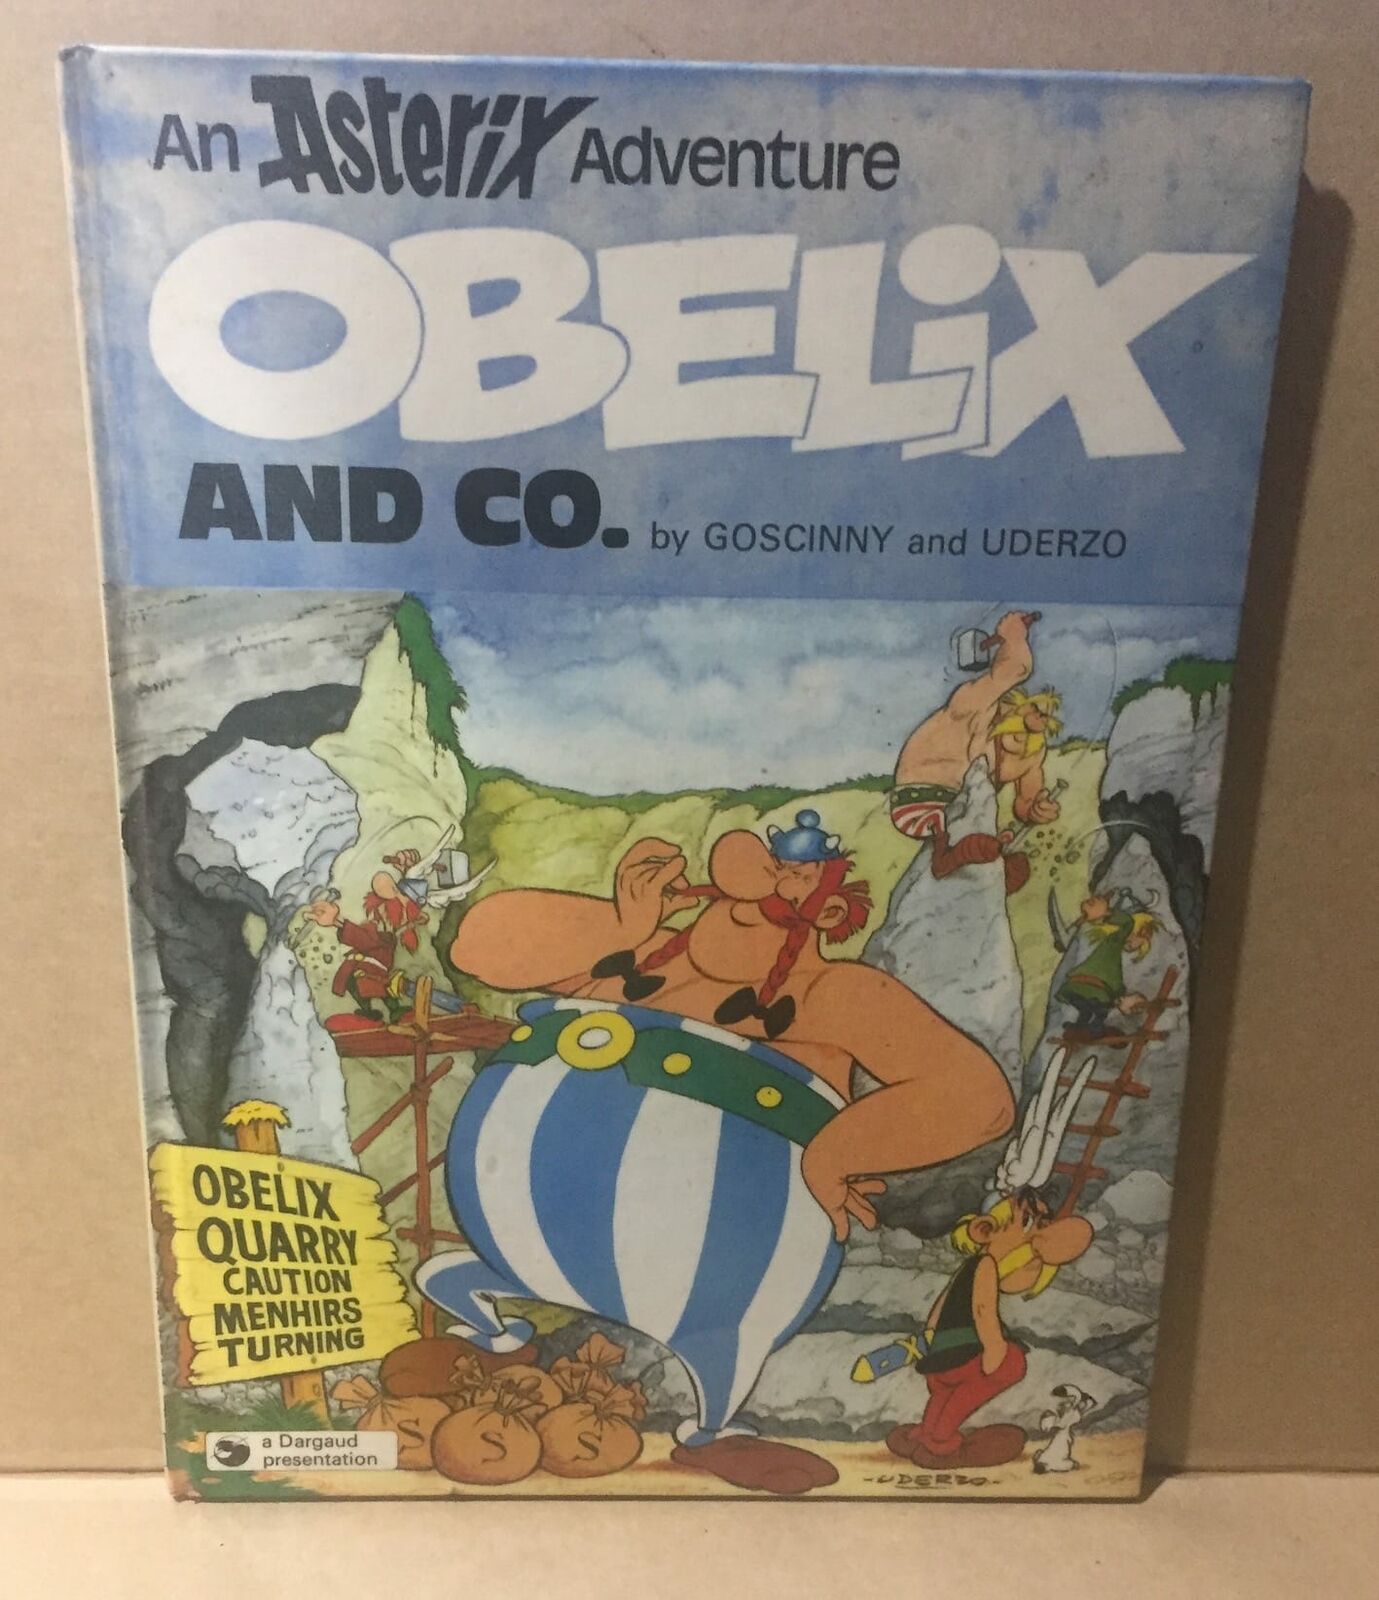 HARD COVER BOOK - ASTERIX ADVENTURE OBELIX AND CO. - GOSCINNY UDERZO